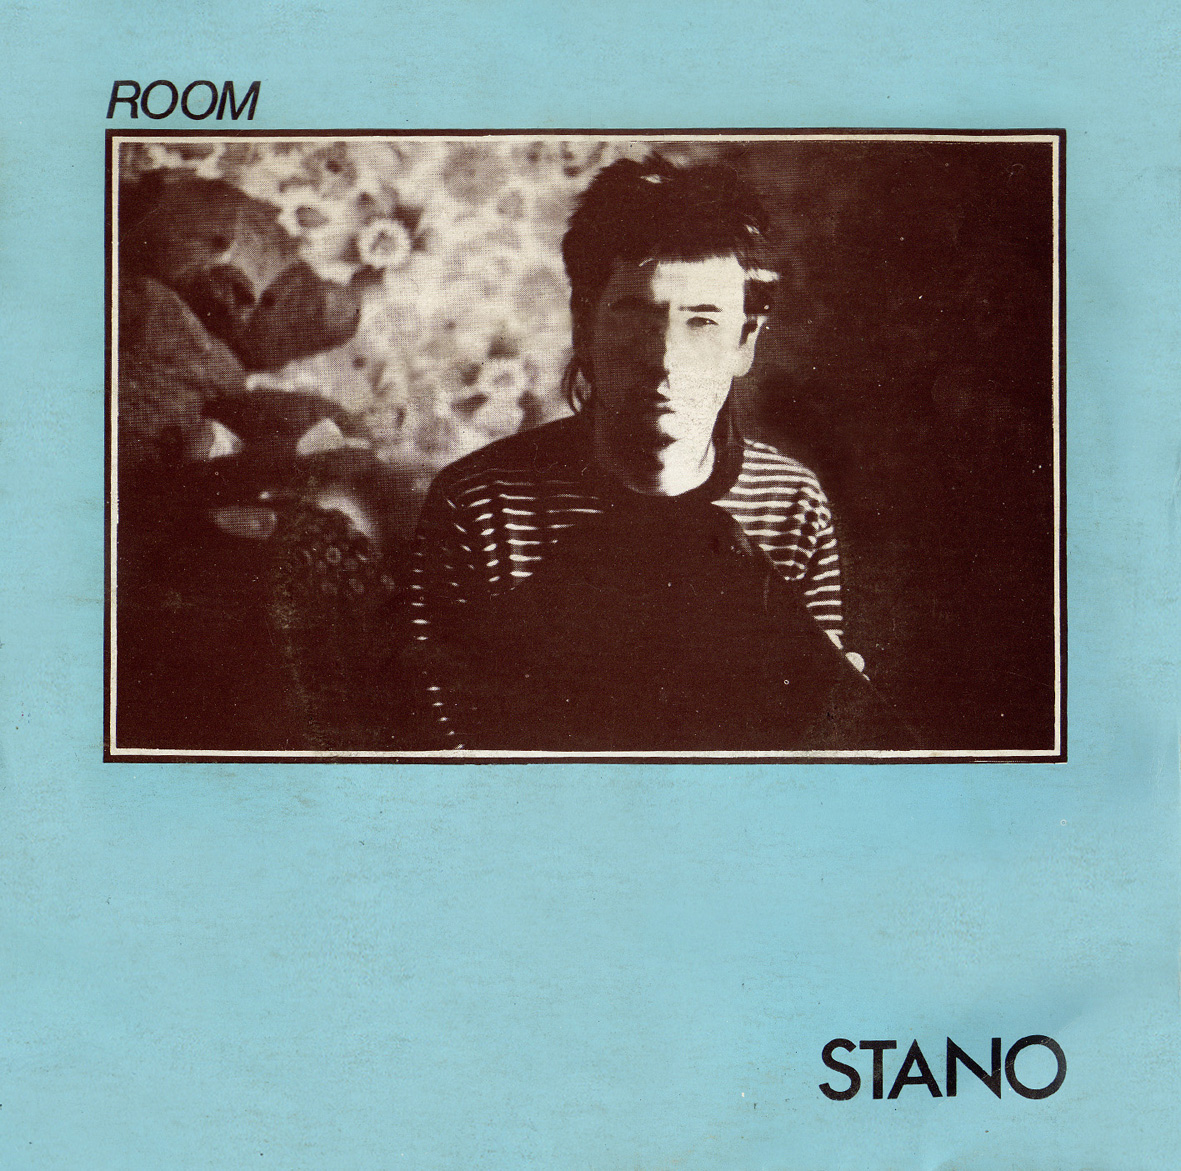 Stano - Room (Single) cover